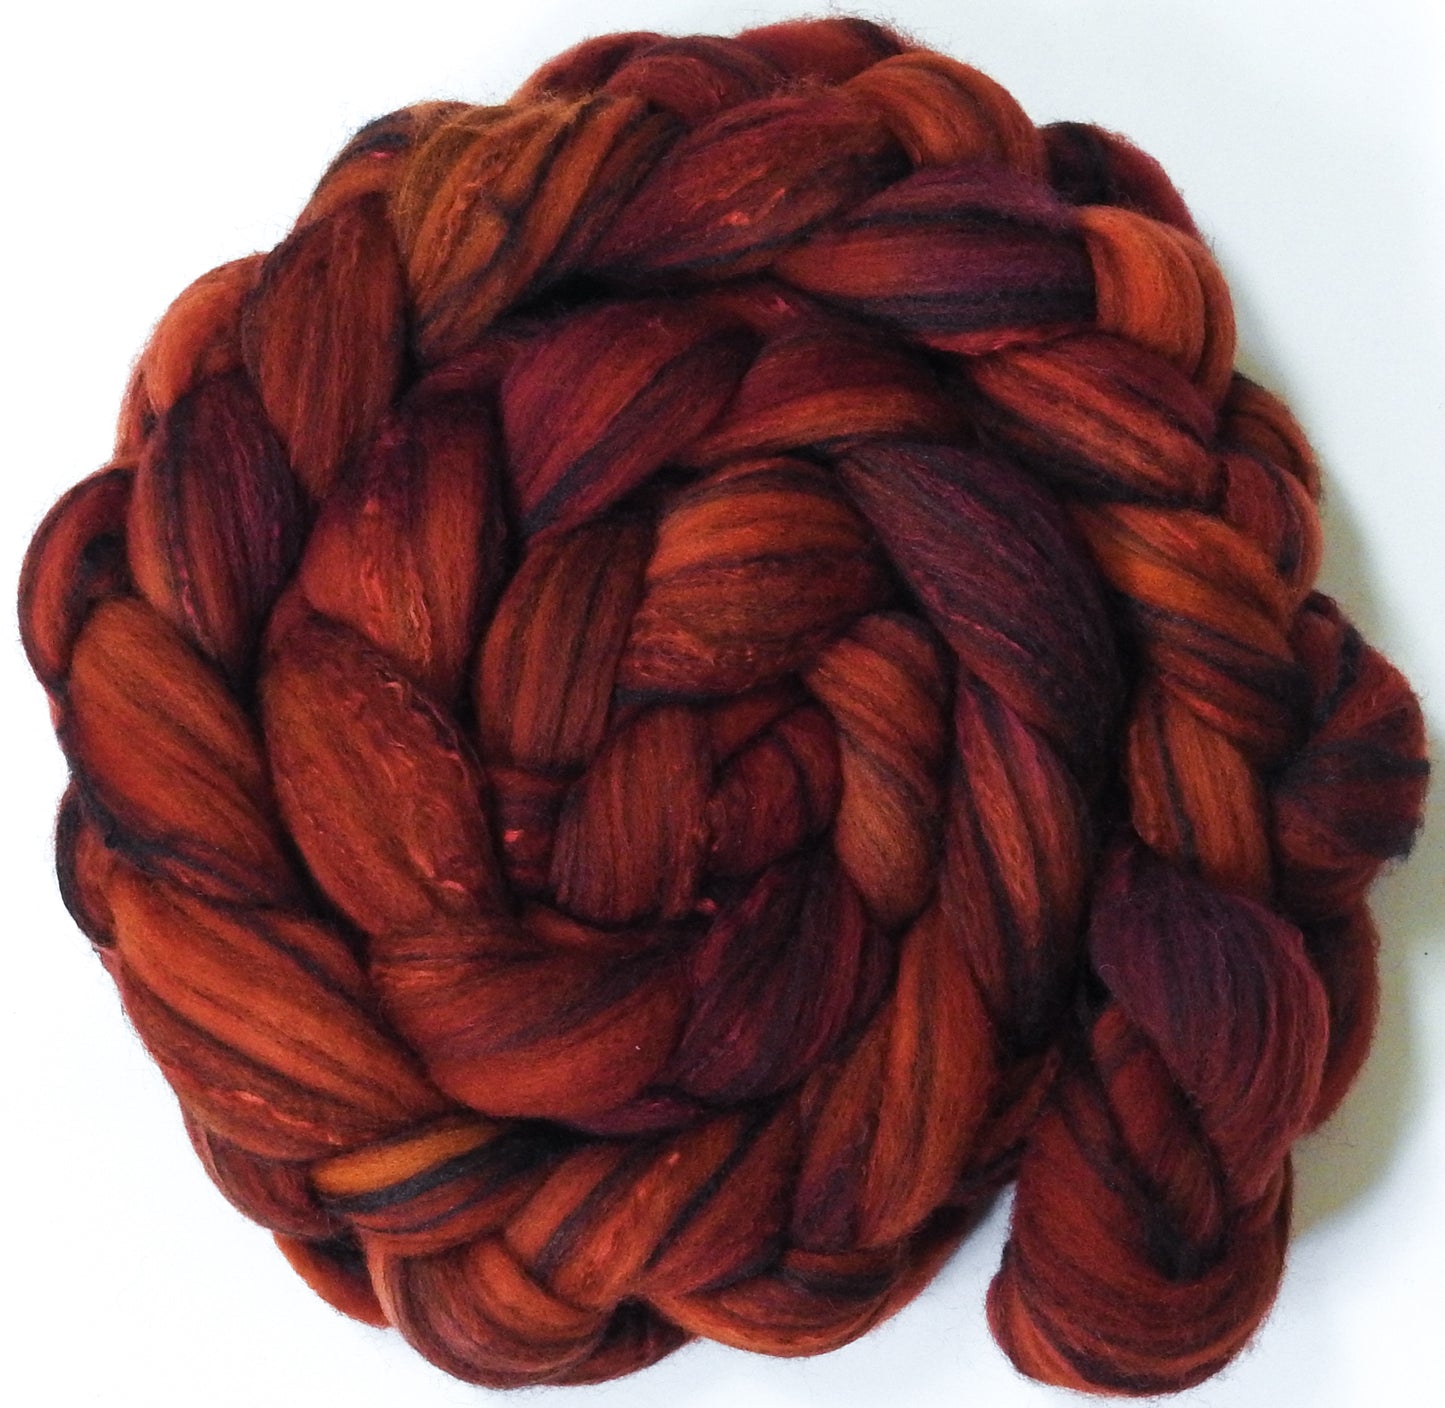 Carnelian -(5.7 oz.) -Glazed Solid- Batt in a Braid #30- Charollais/ Rambouillet / Black tussah /Mulberry silk (40/40/10/10)